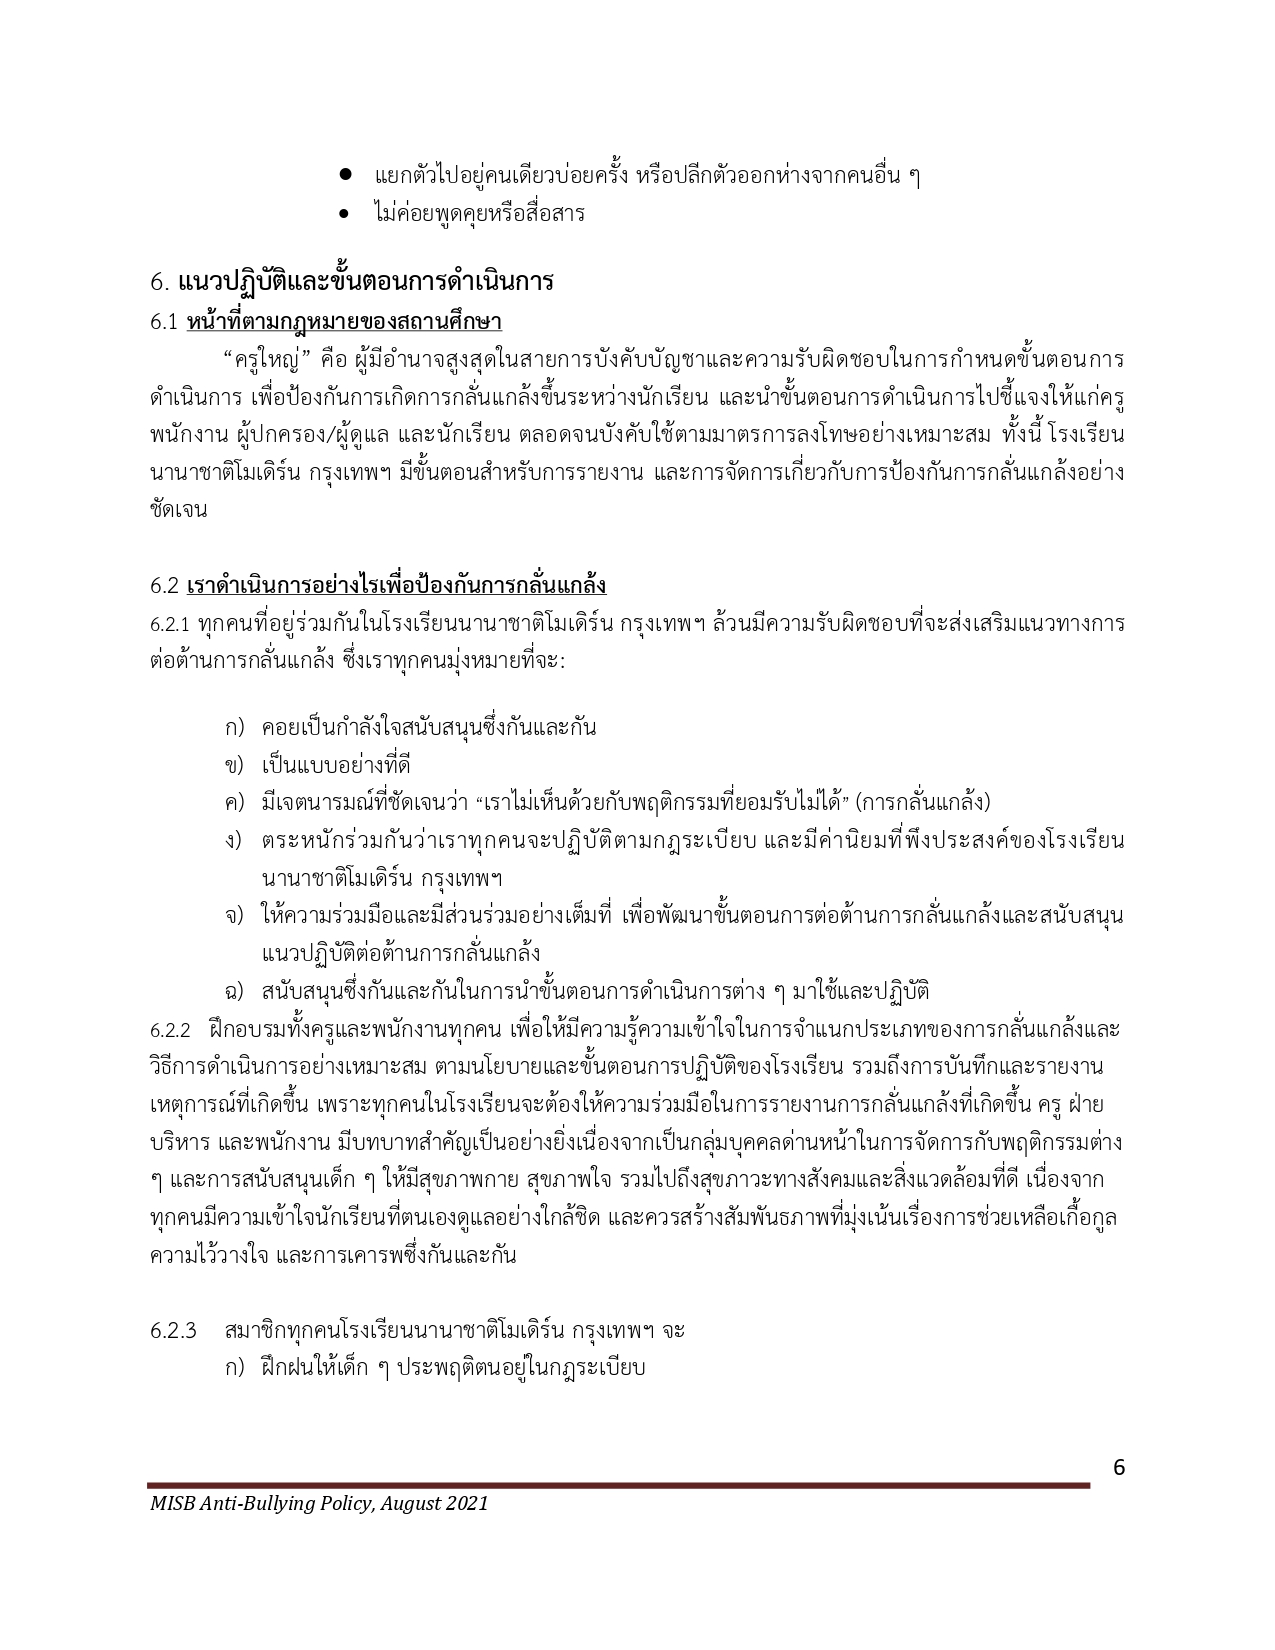 Anti Bullying Policy 2021 2023 Thai Language page 0008